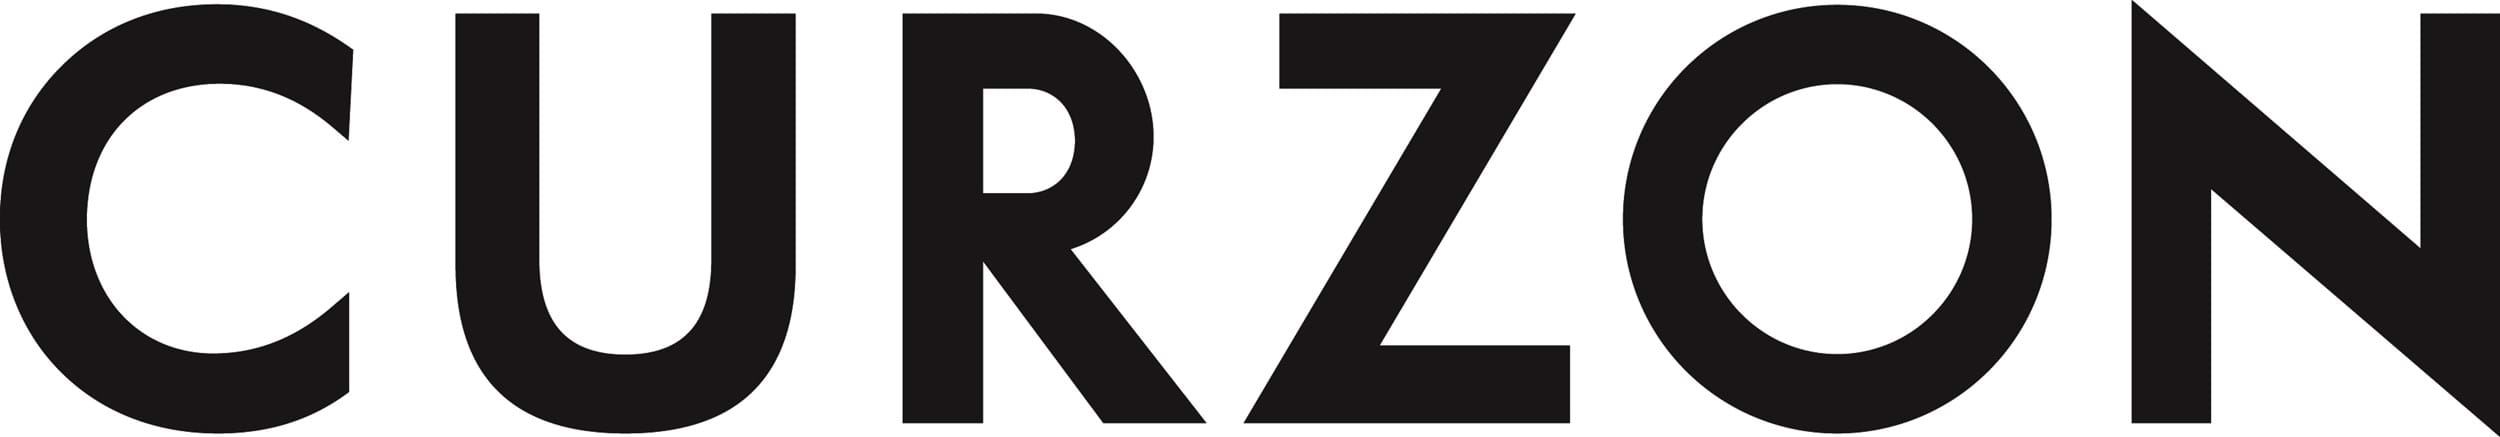 Curzon logo